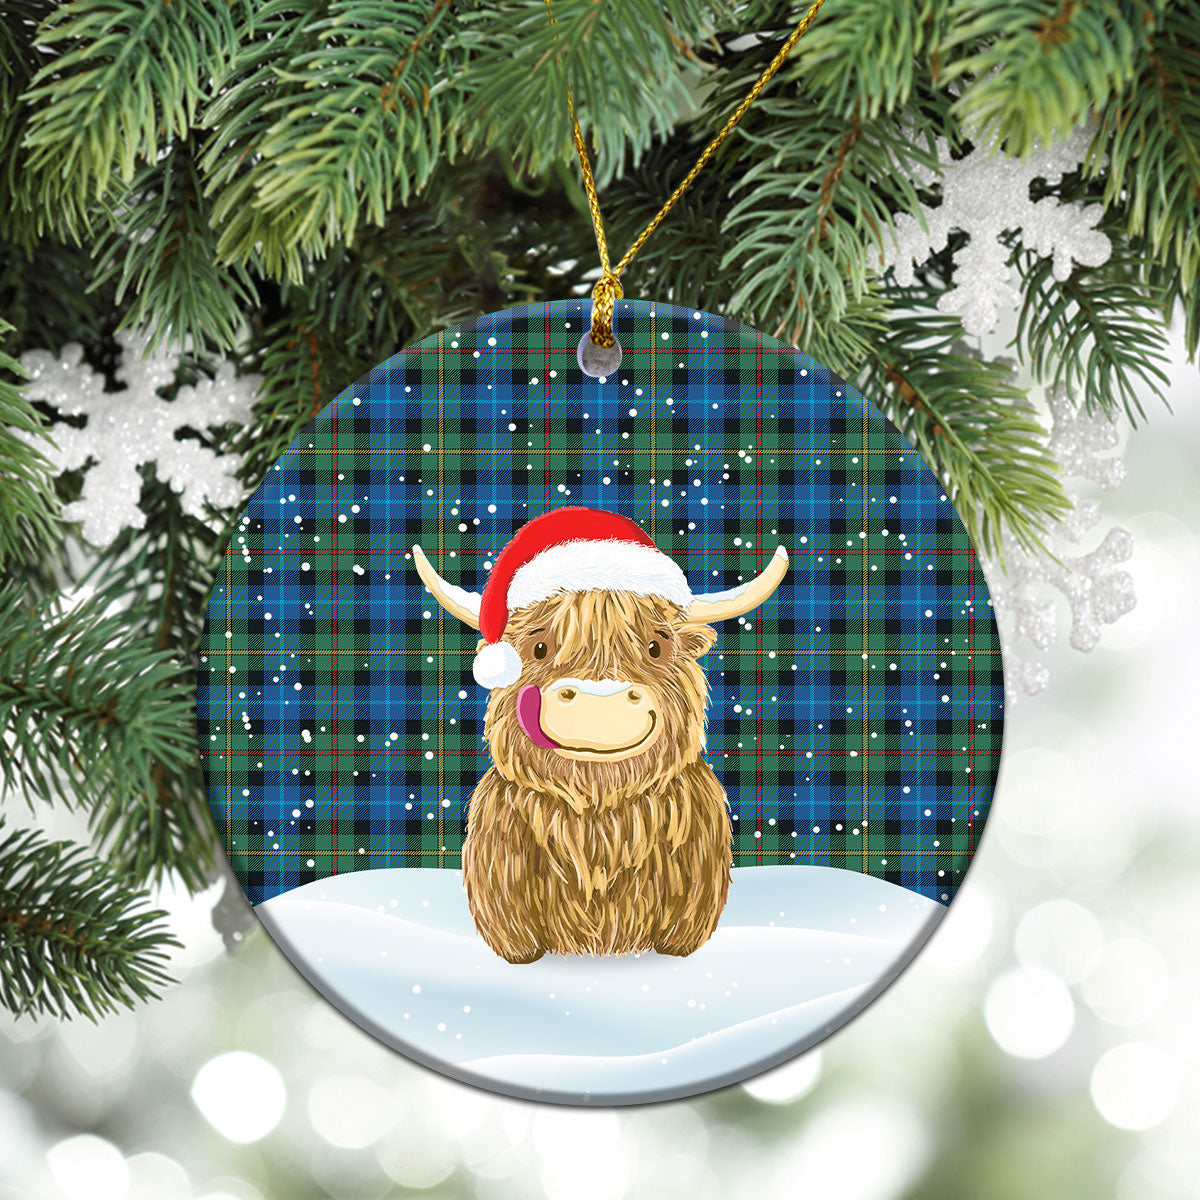 Smith Ancient Tartan Christmas Ceramic Ornament - Highland Cows Style